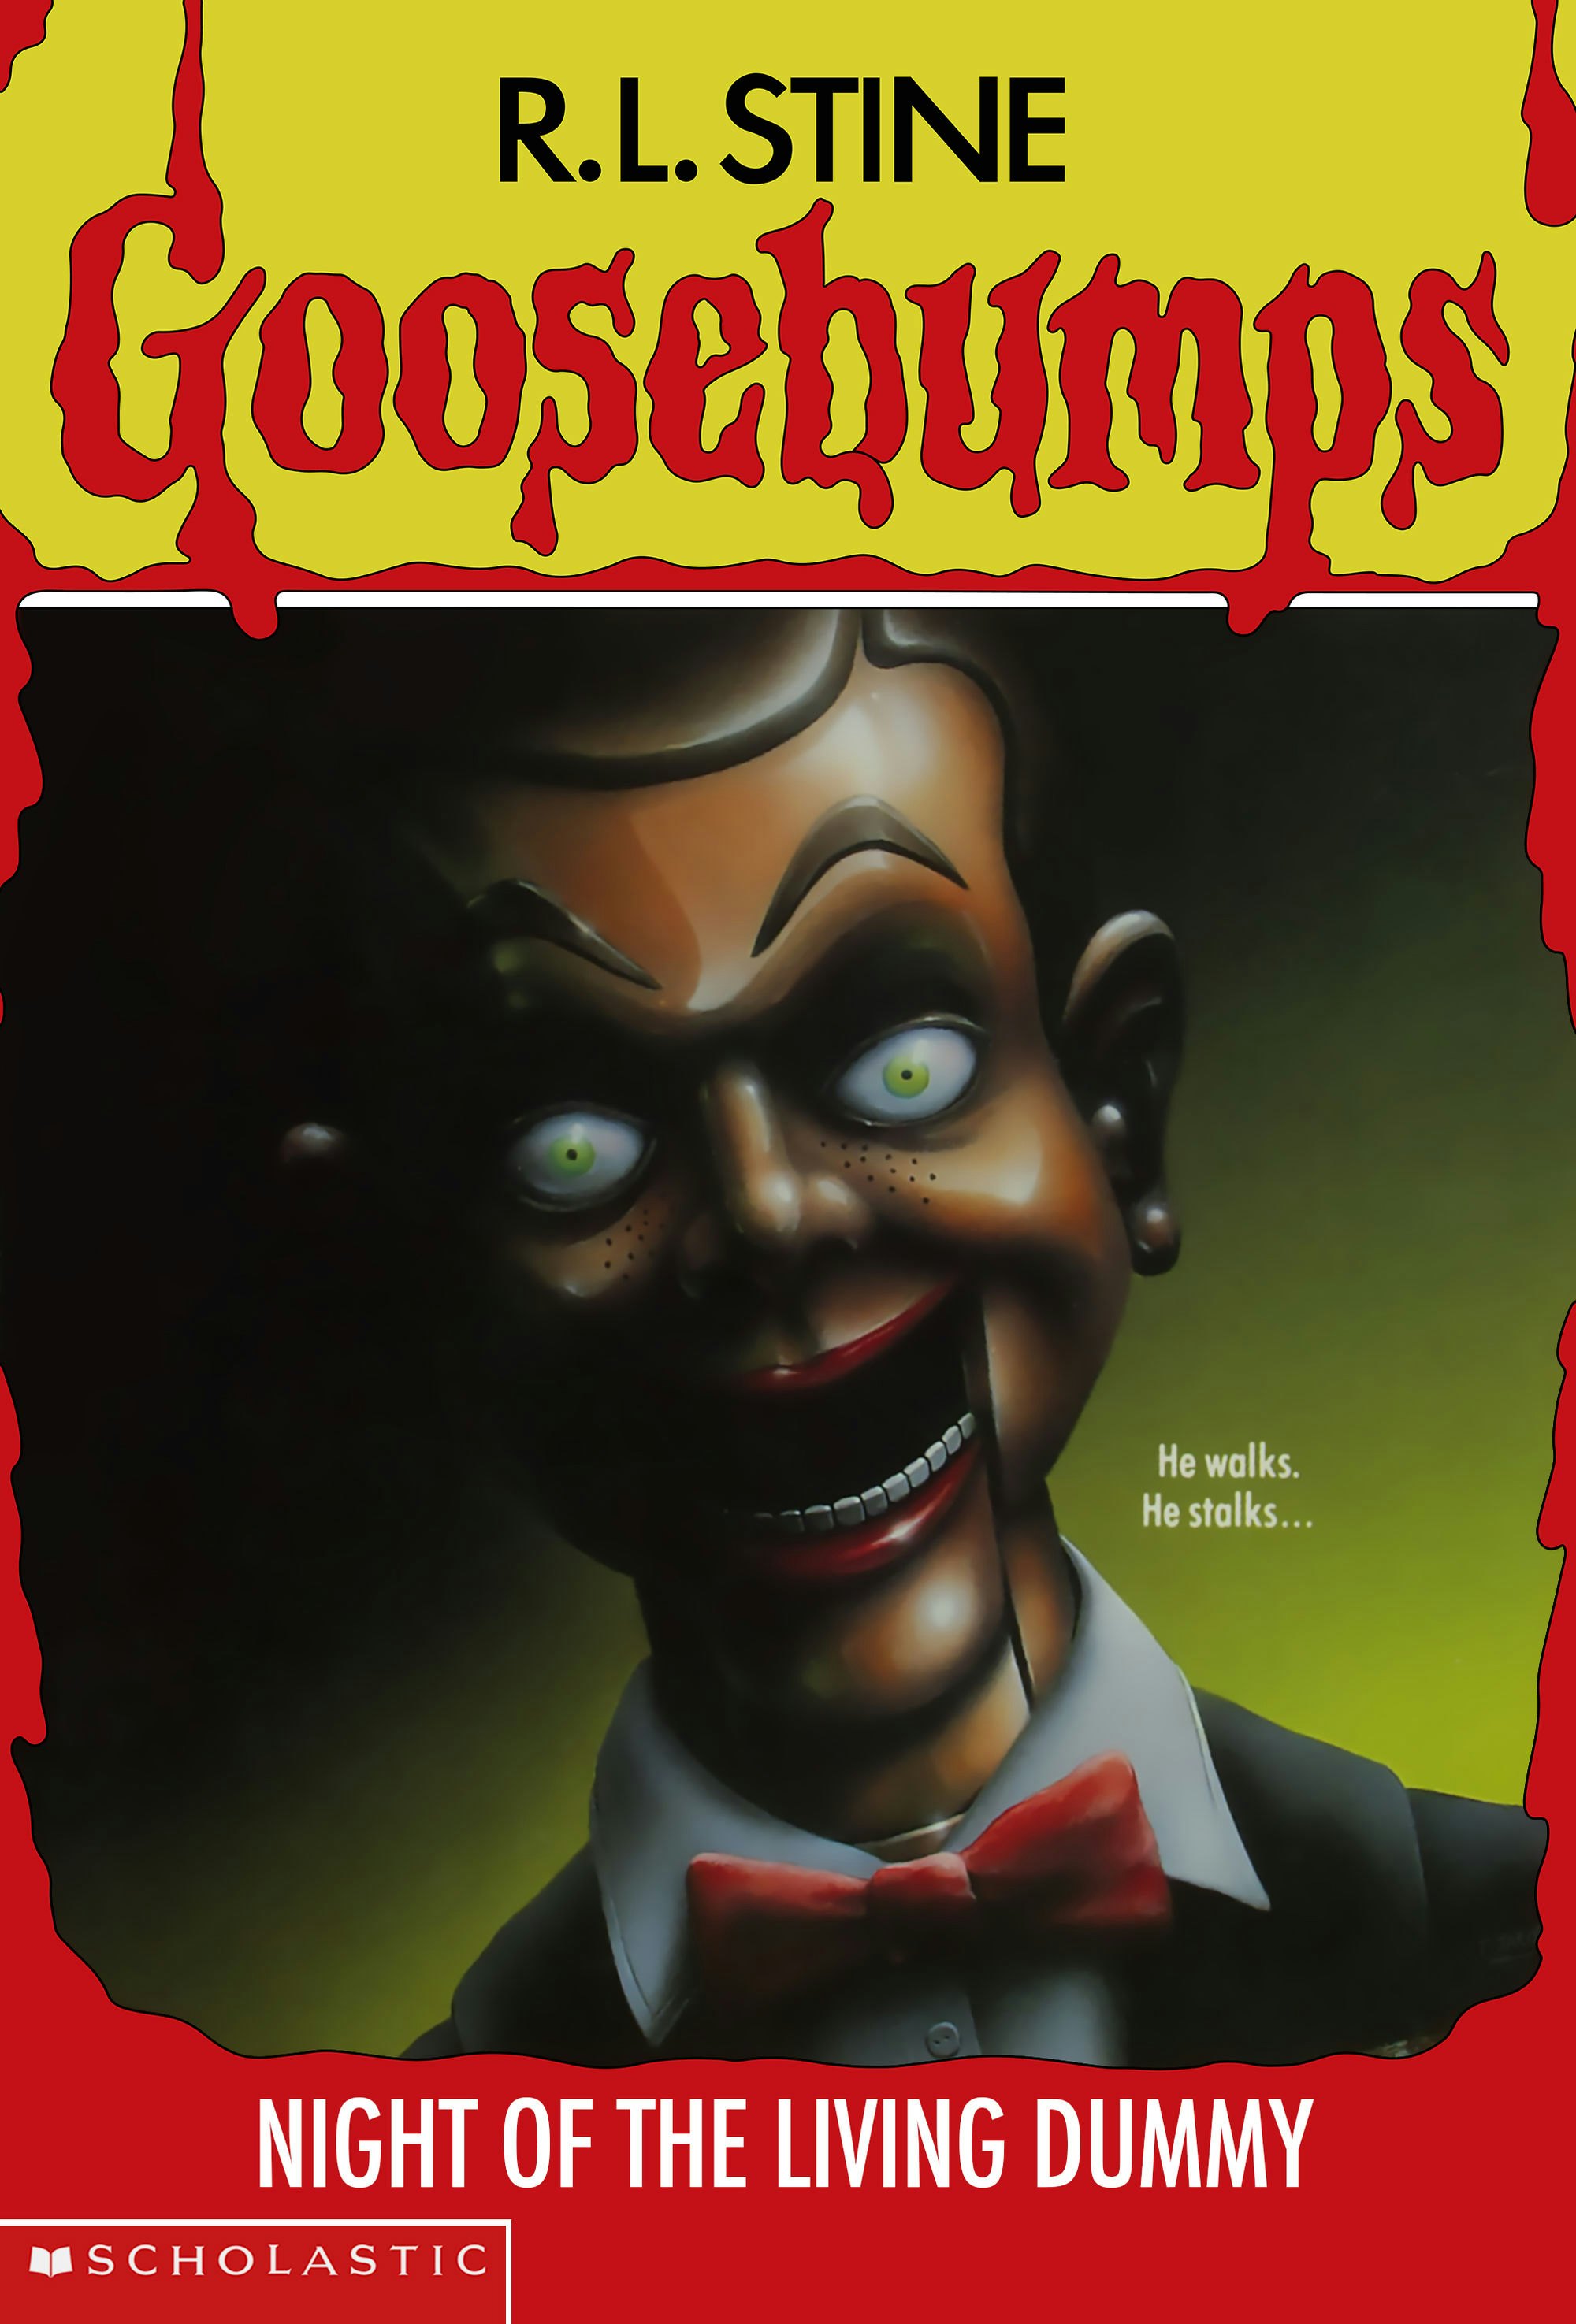 goosebumps ventriloquist book